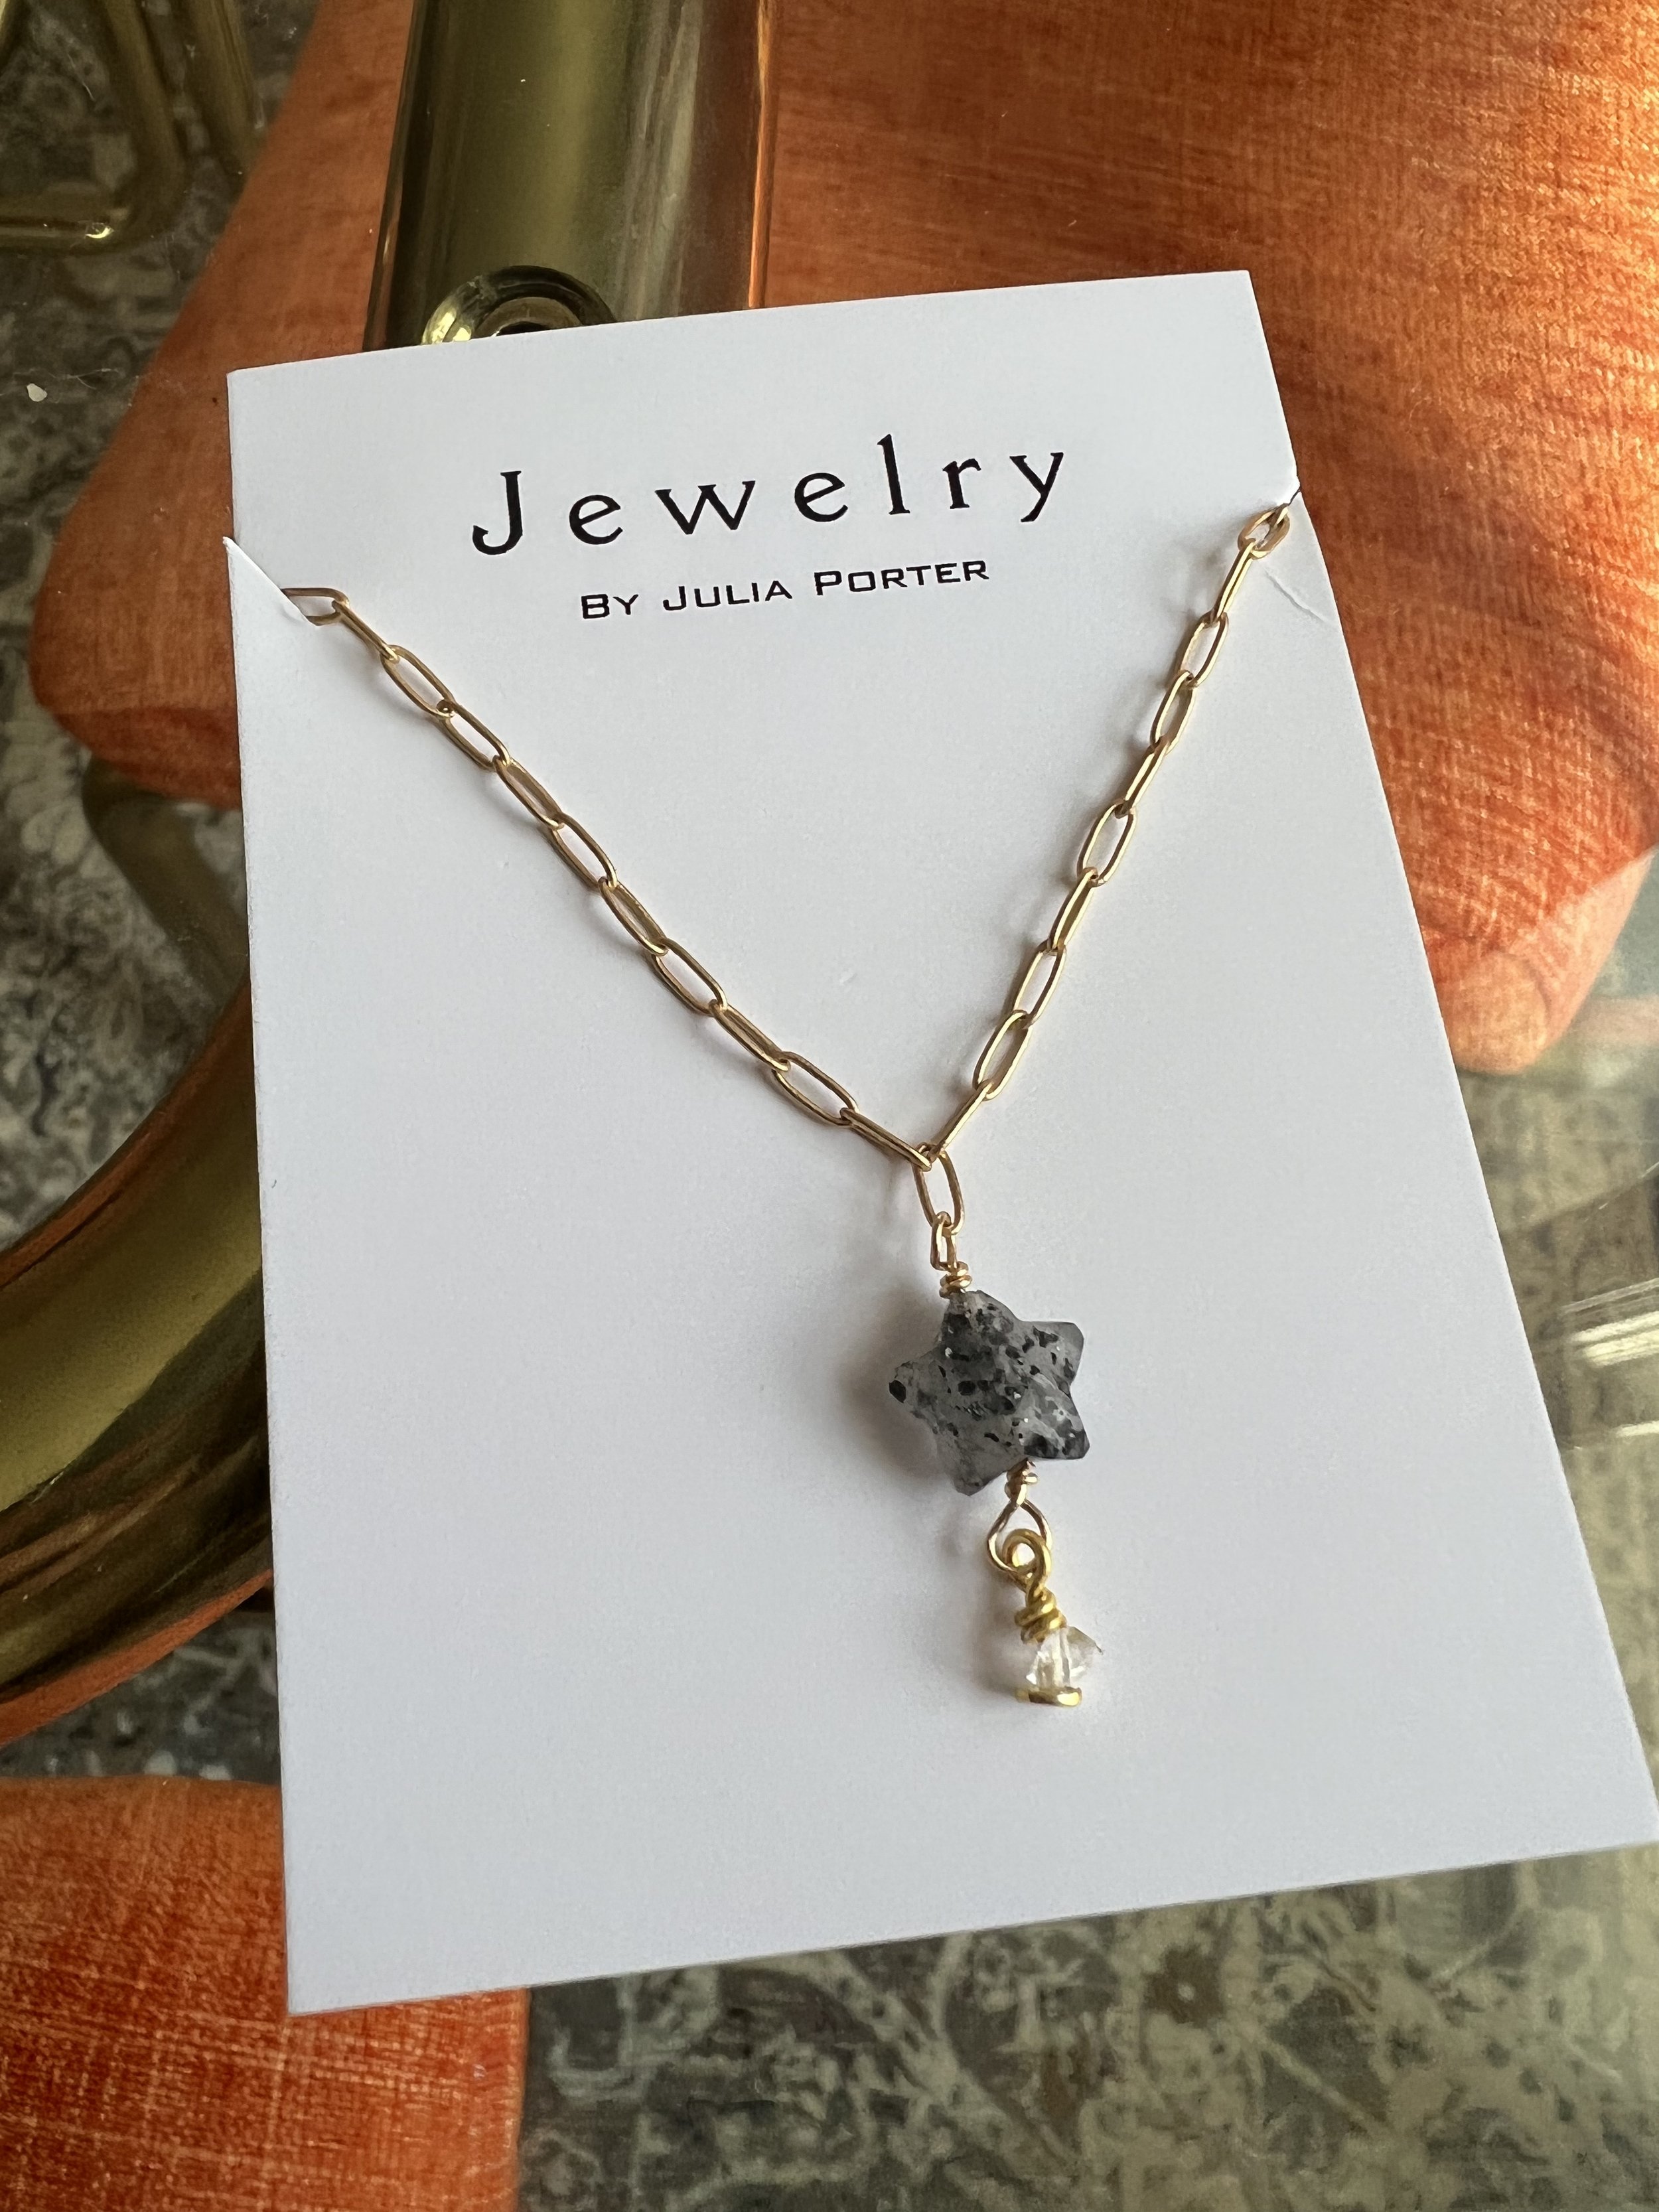 Jewelry by Julia Porter